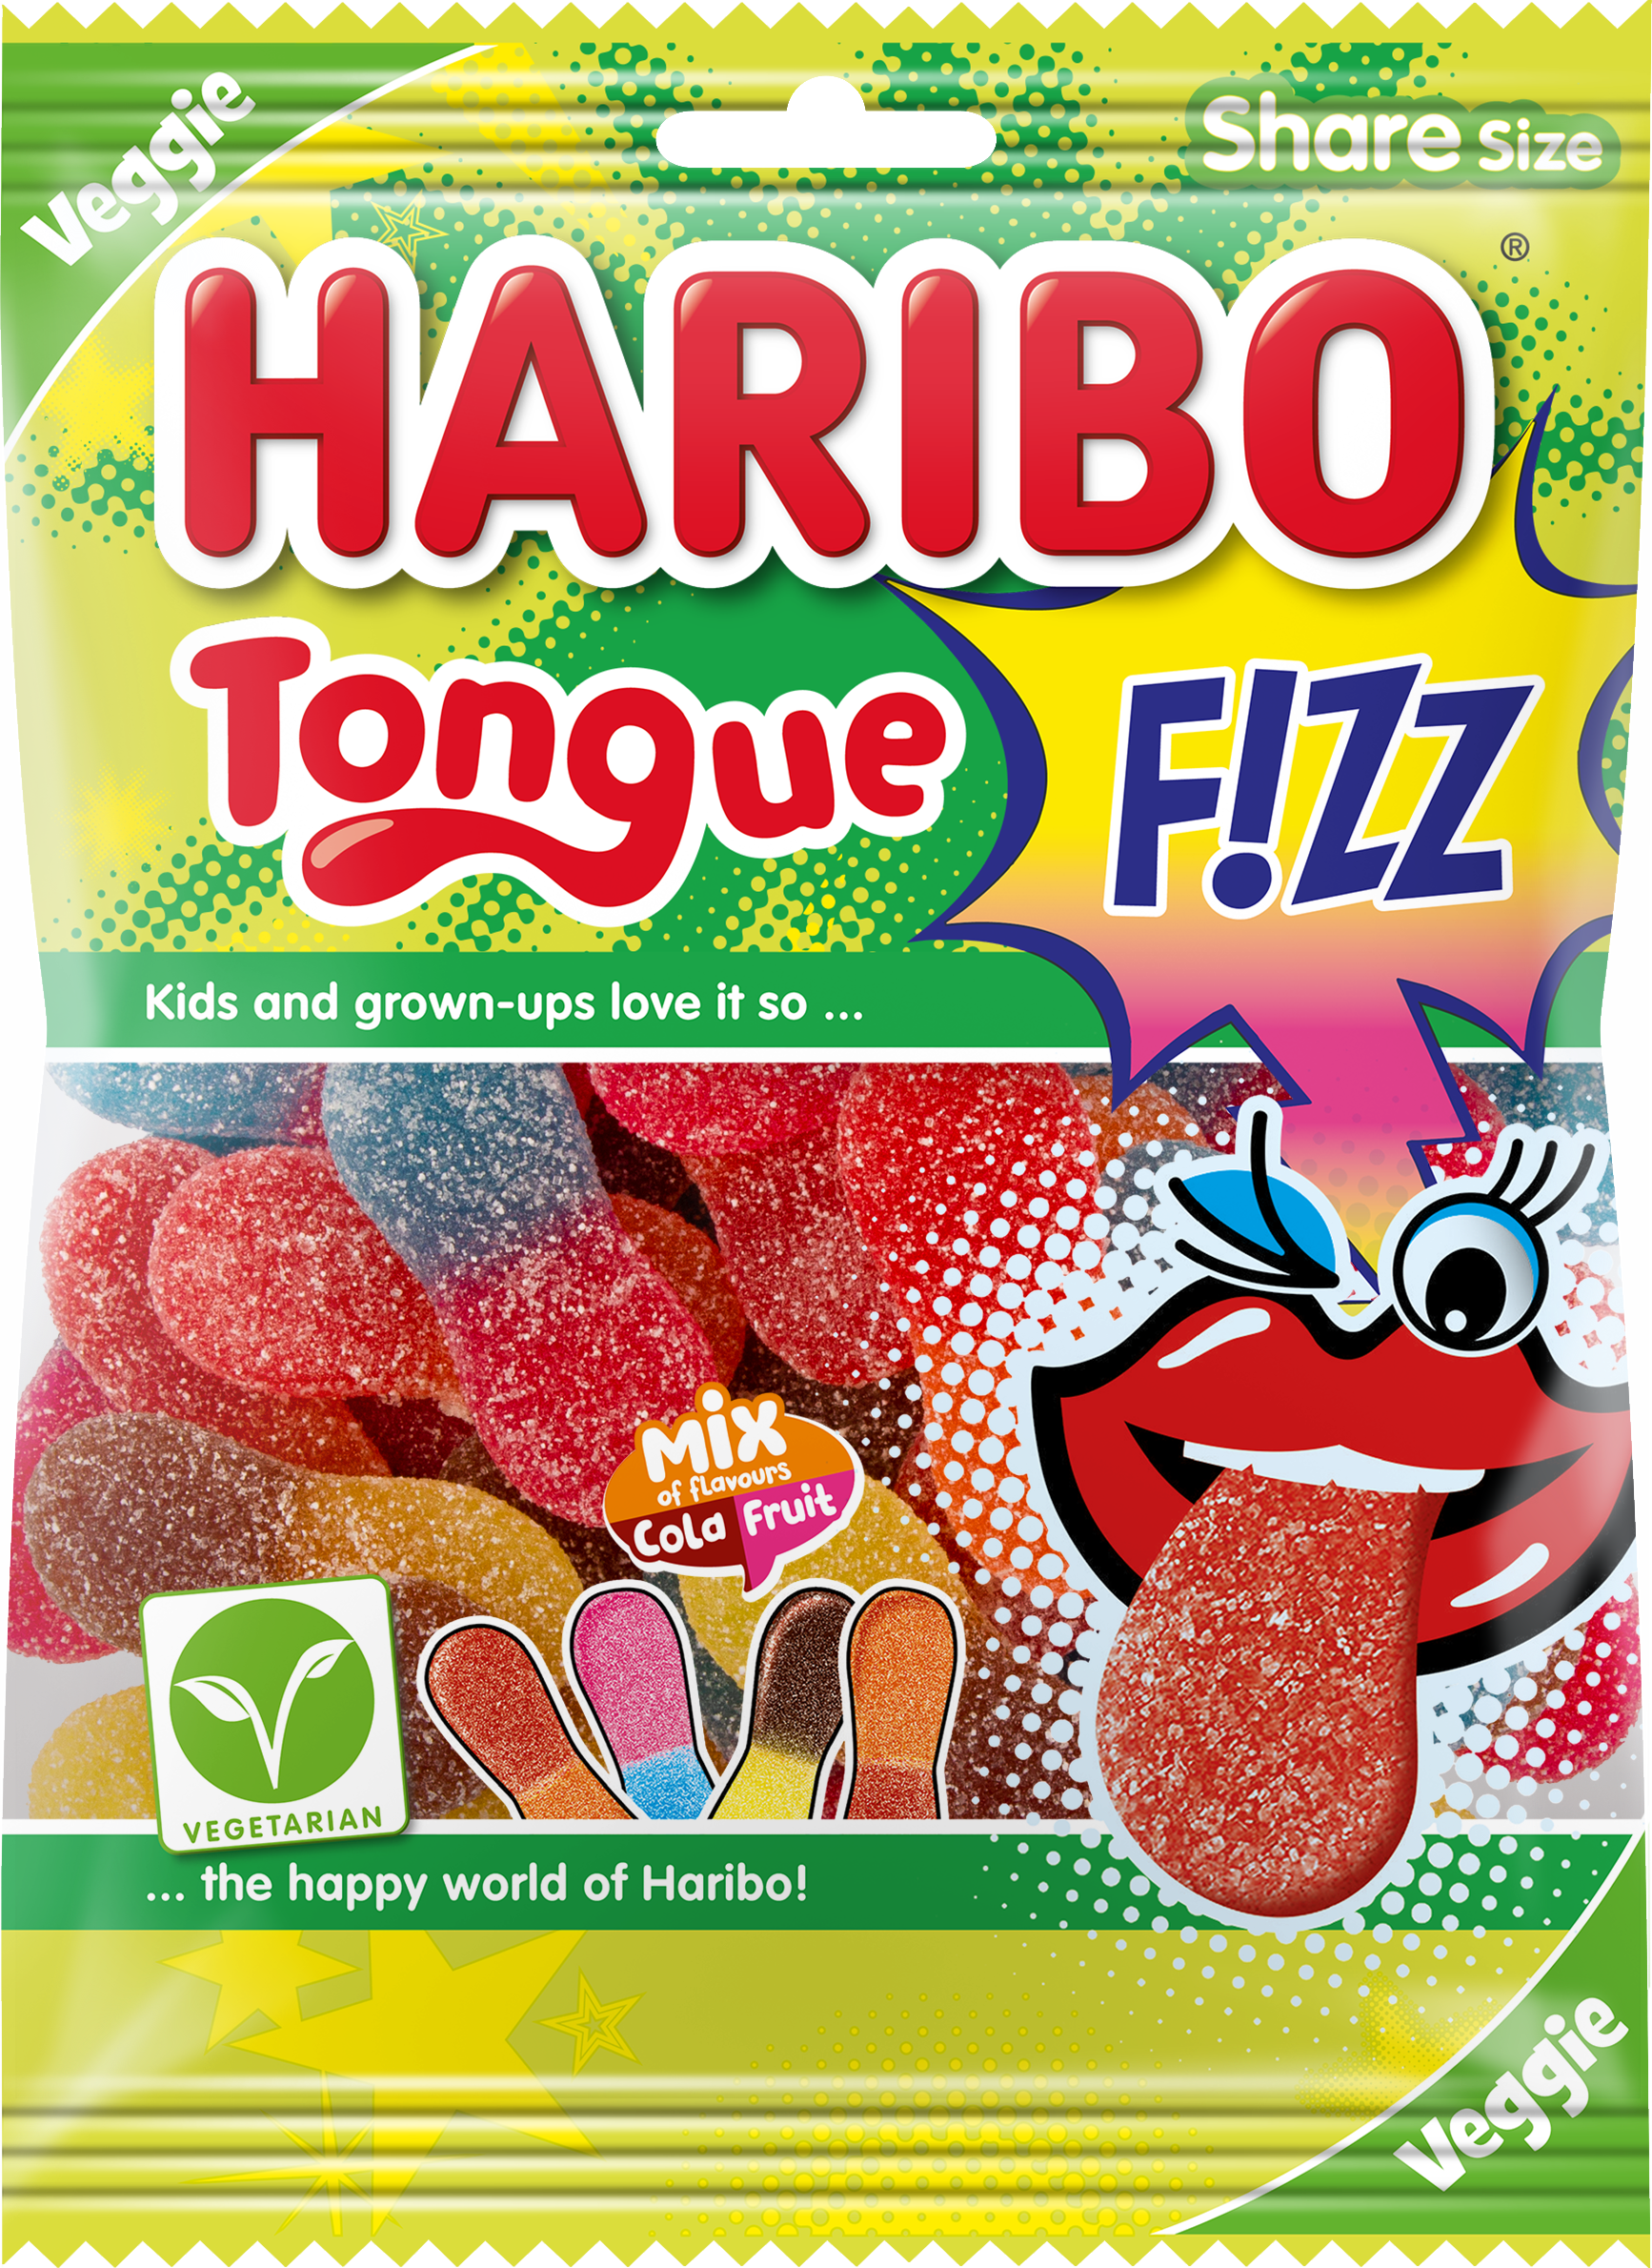 21302001 7337 Haribo Tongue FIZZ 185g Share Size